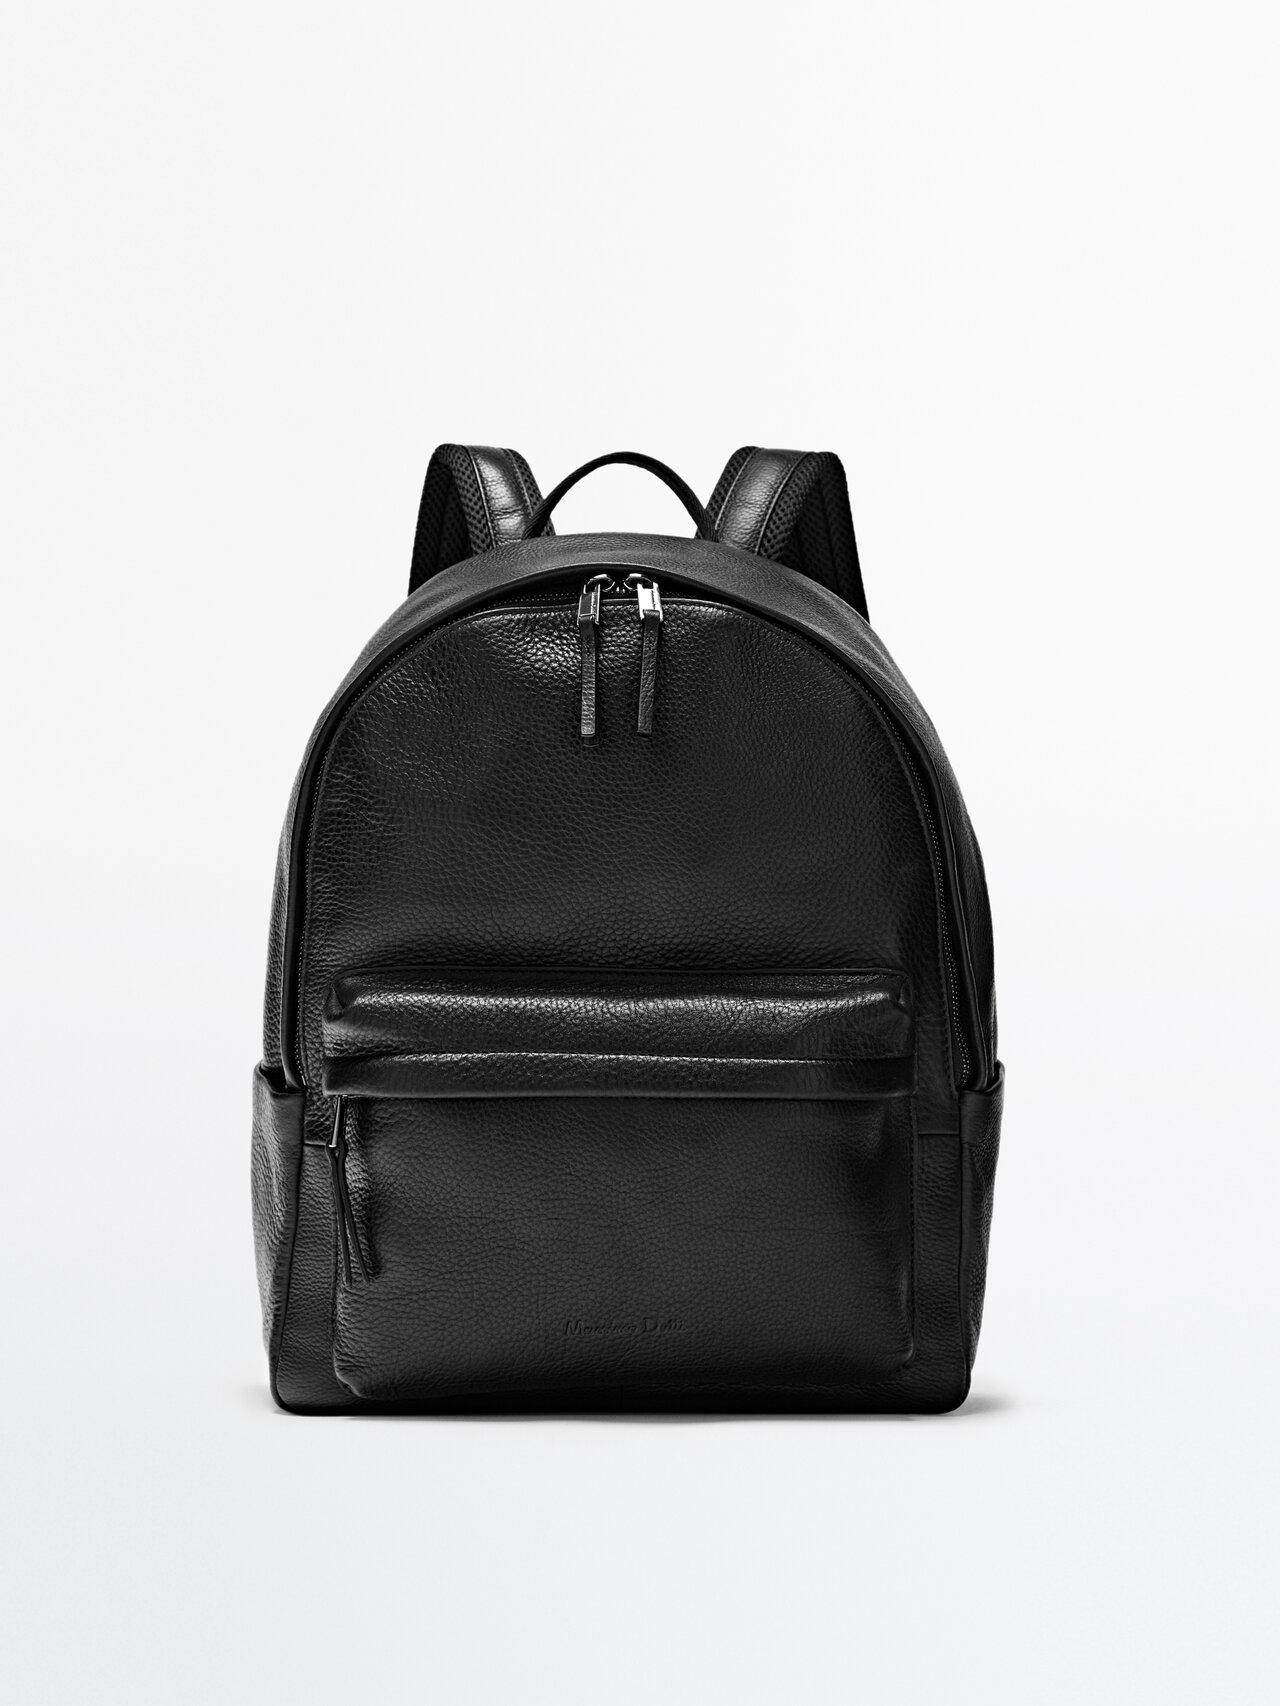 MASSIMO DUTTI Black Montana Leather Backpack for Men | Lyst